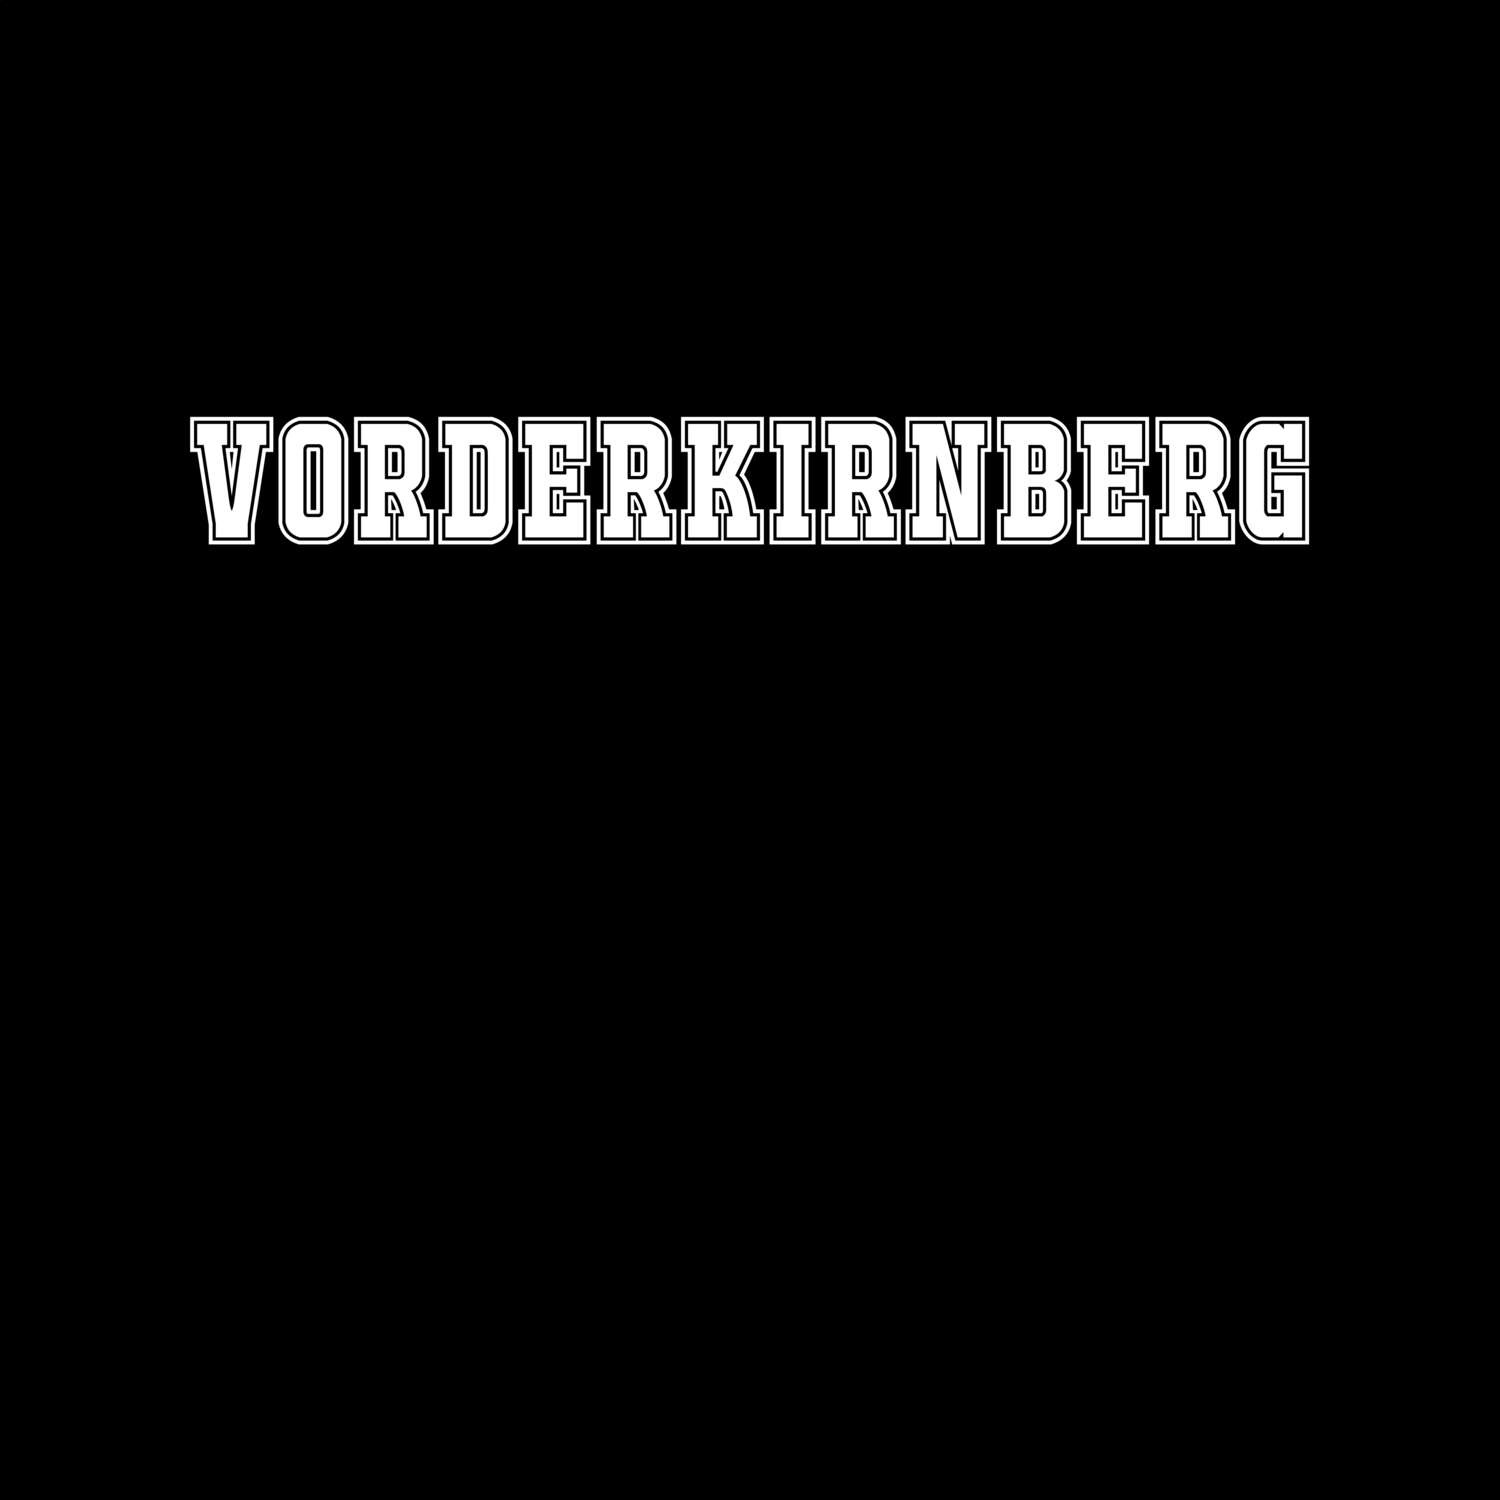 Vorderkirnberg T-Shirt »Classic«